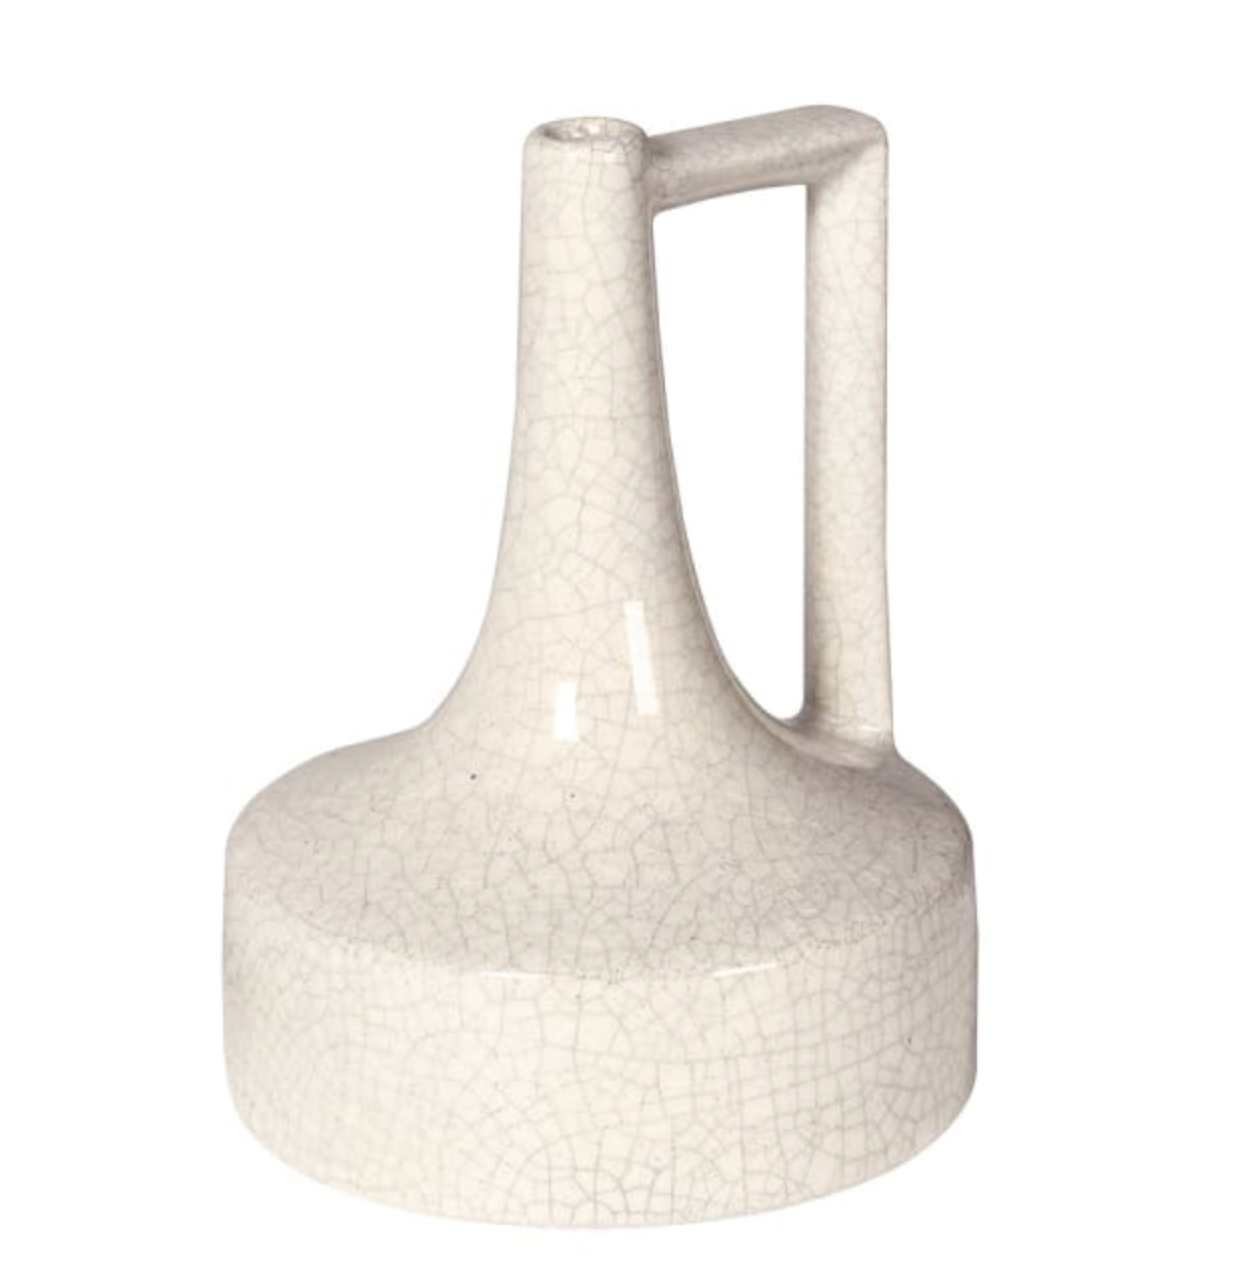 Distressed White Handled Jug Vase - Small